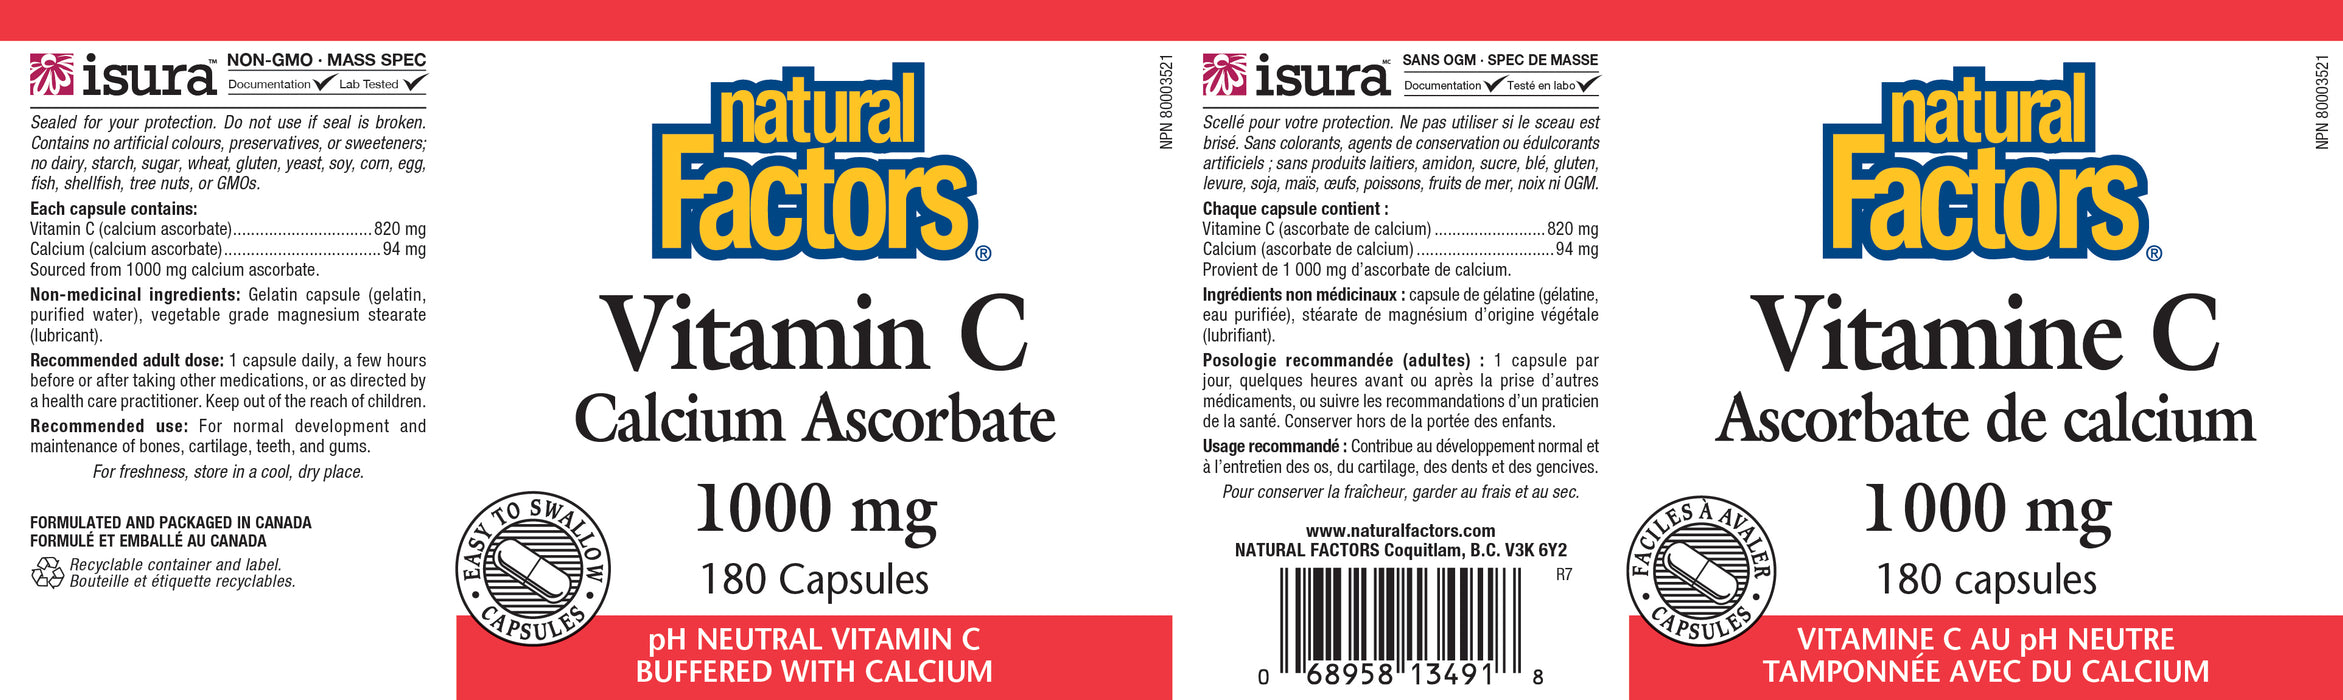 Natural Factors Vitamin C - Calcium Ascorbate 1000mg 180 Veg Capsules